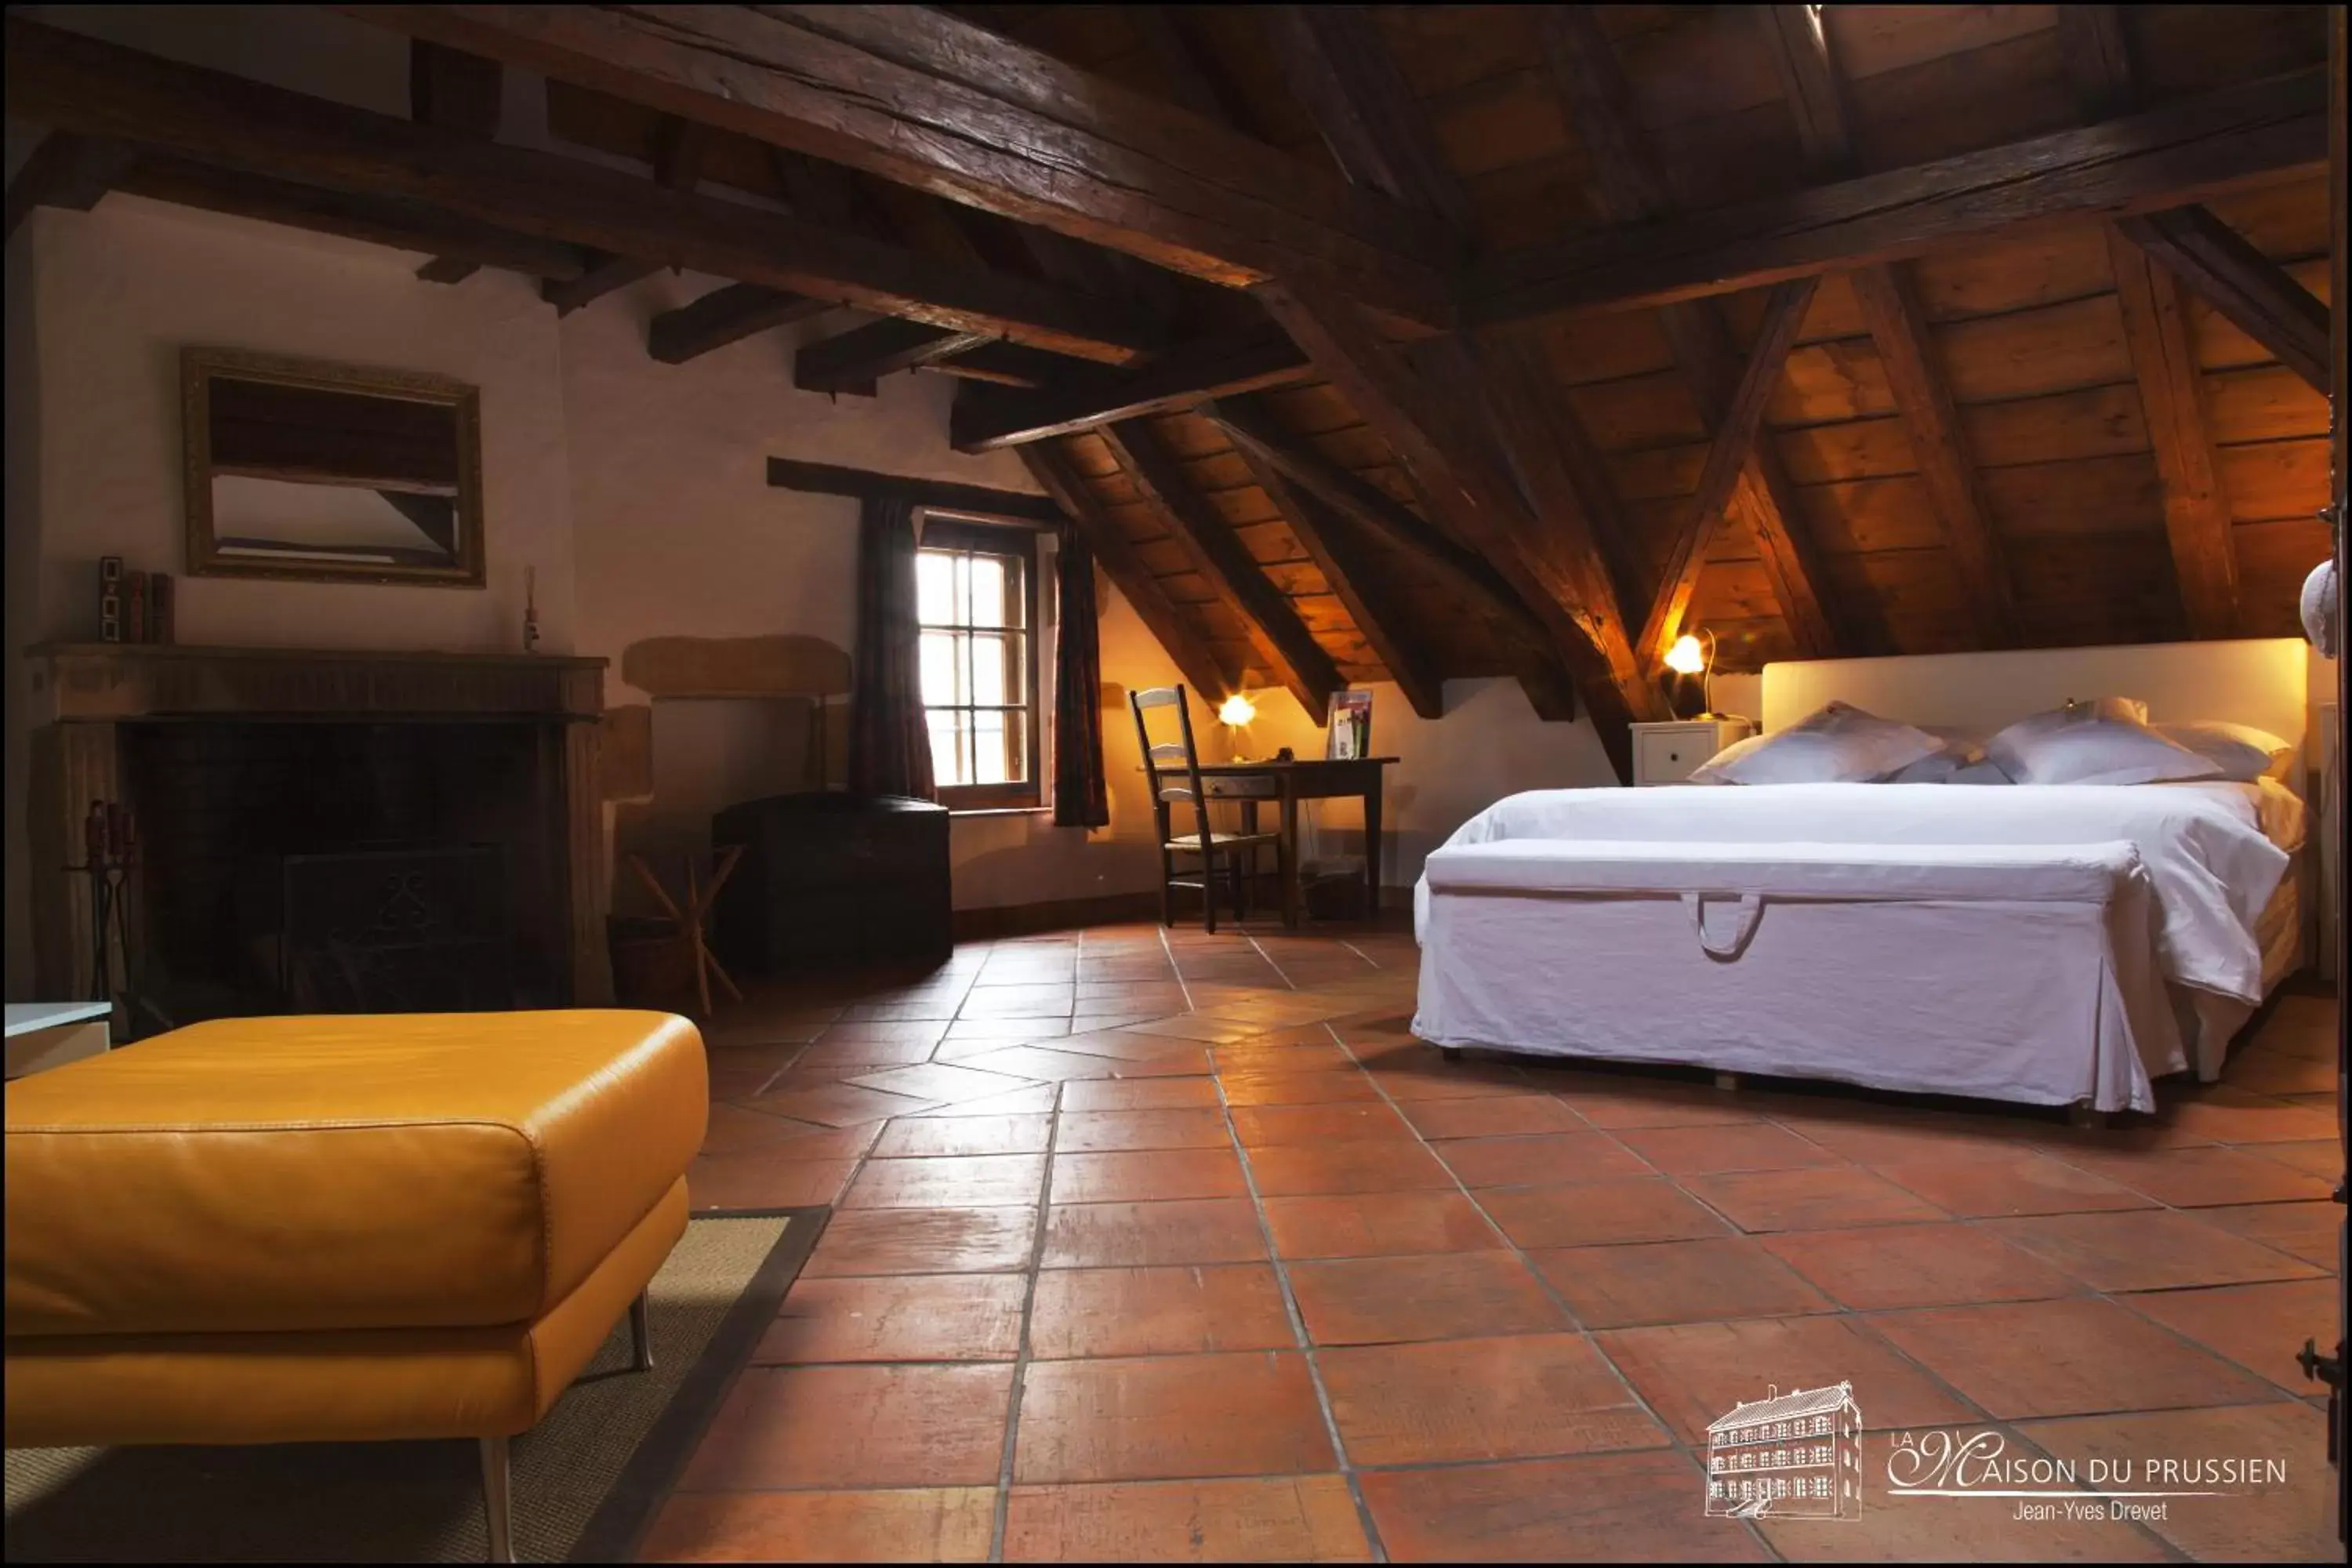 Bed in Hôtel La Maison du Prussien